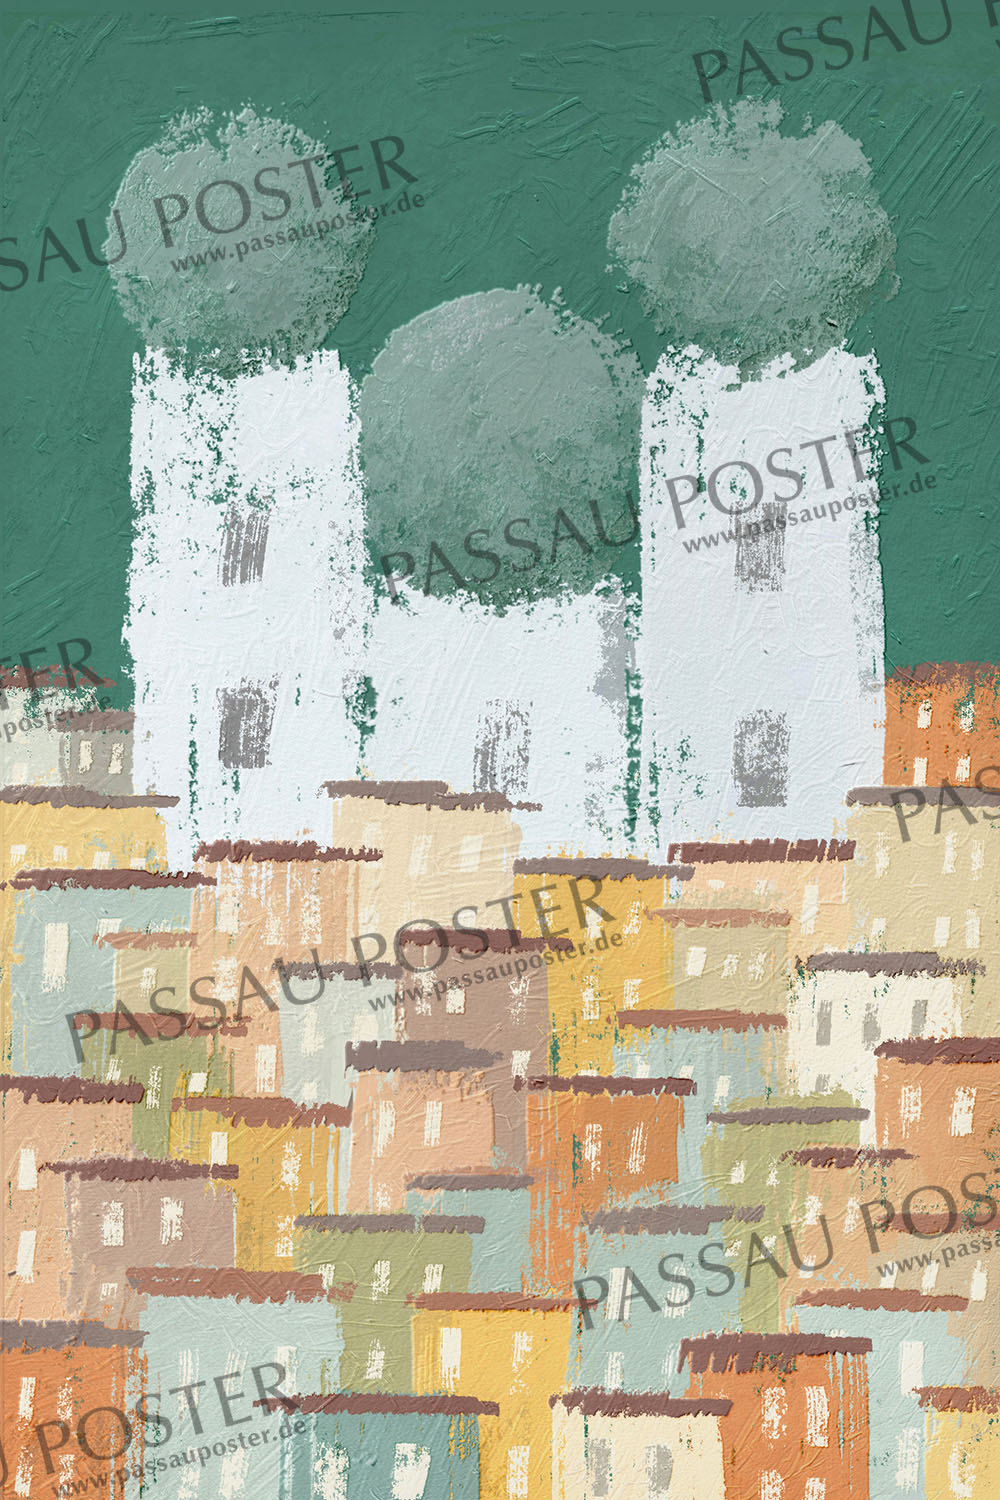 Passau Poster - Passauer Farben